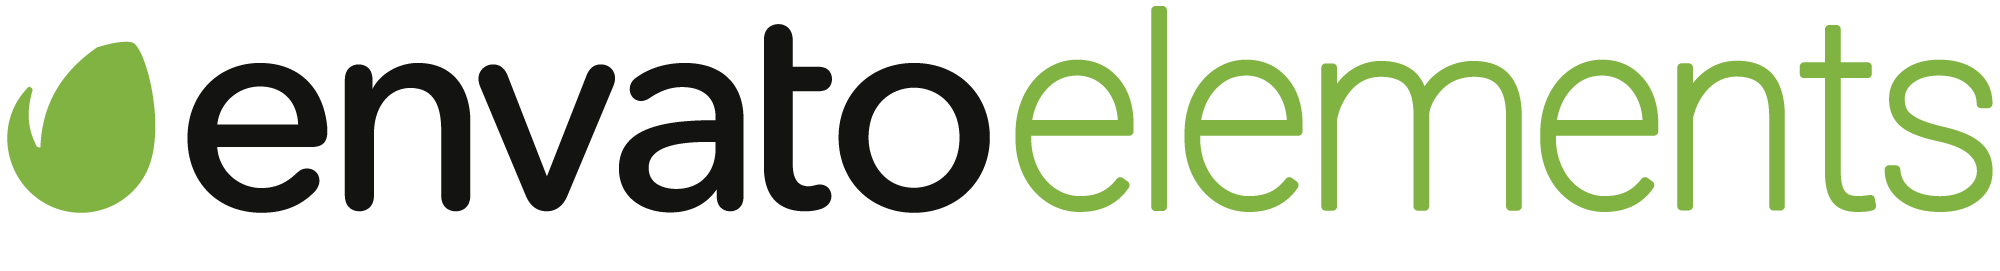 Envato Elements Logo